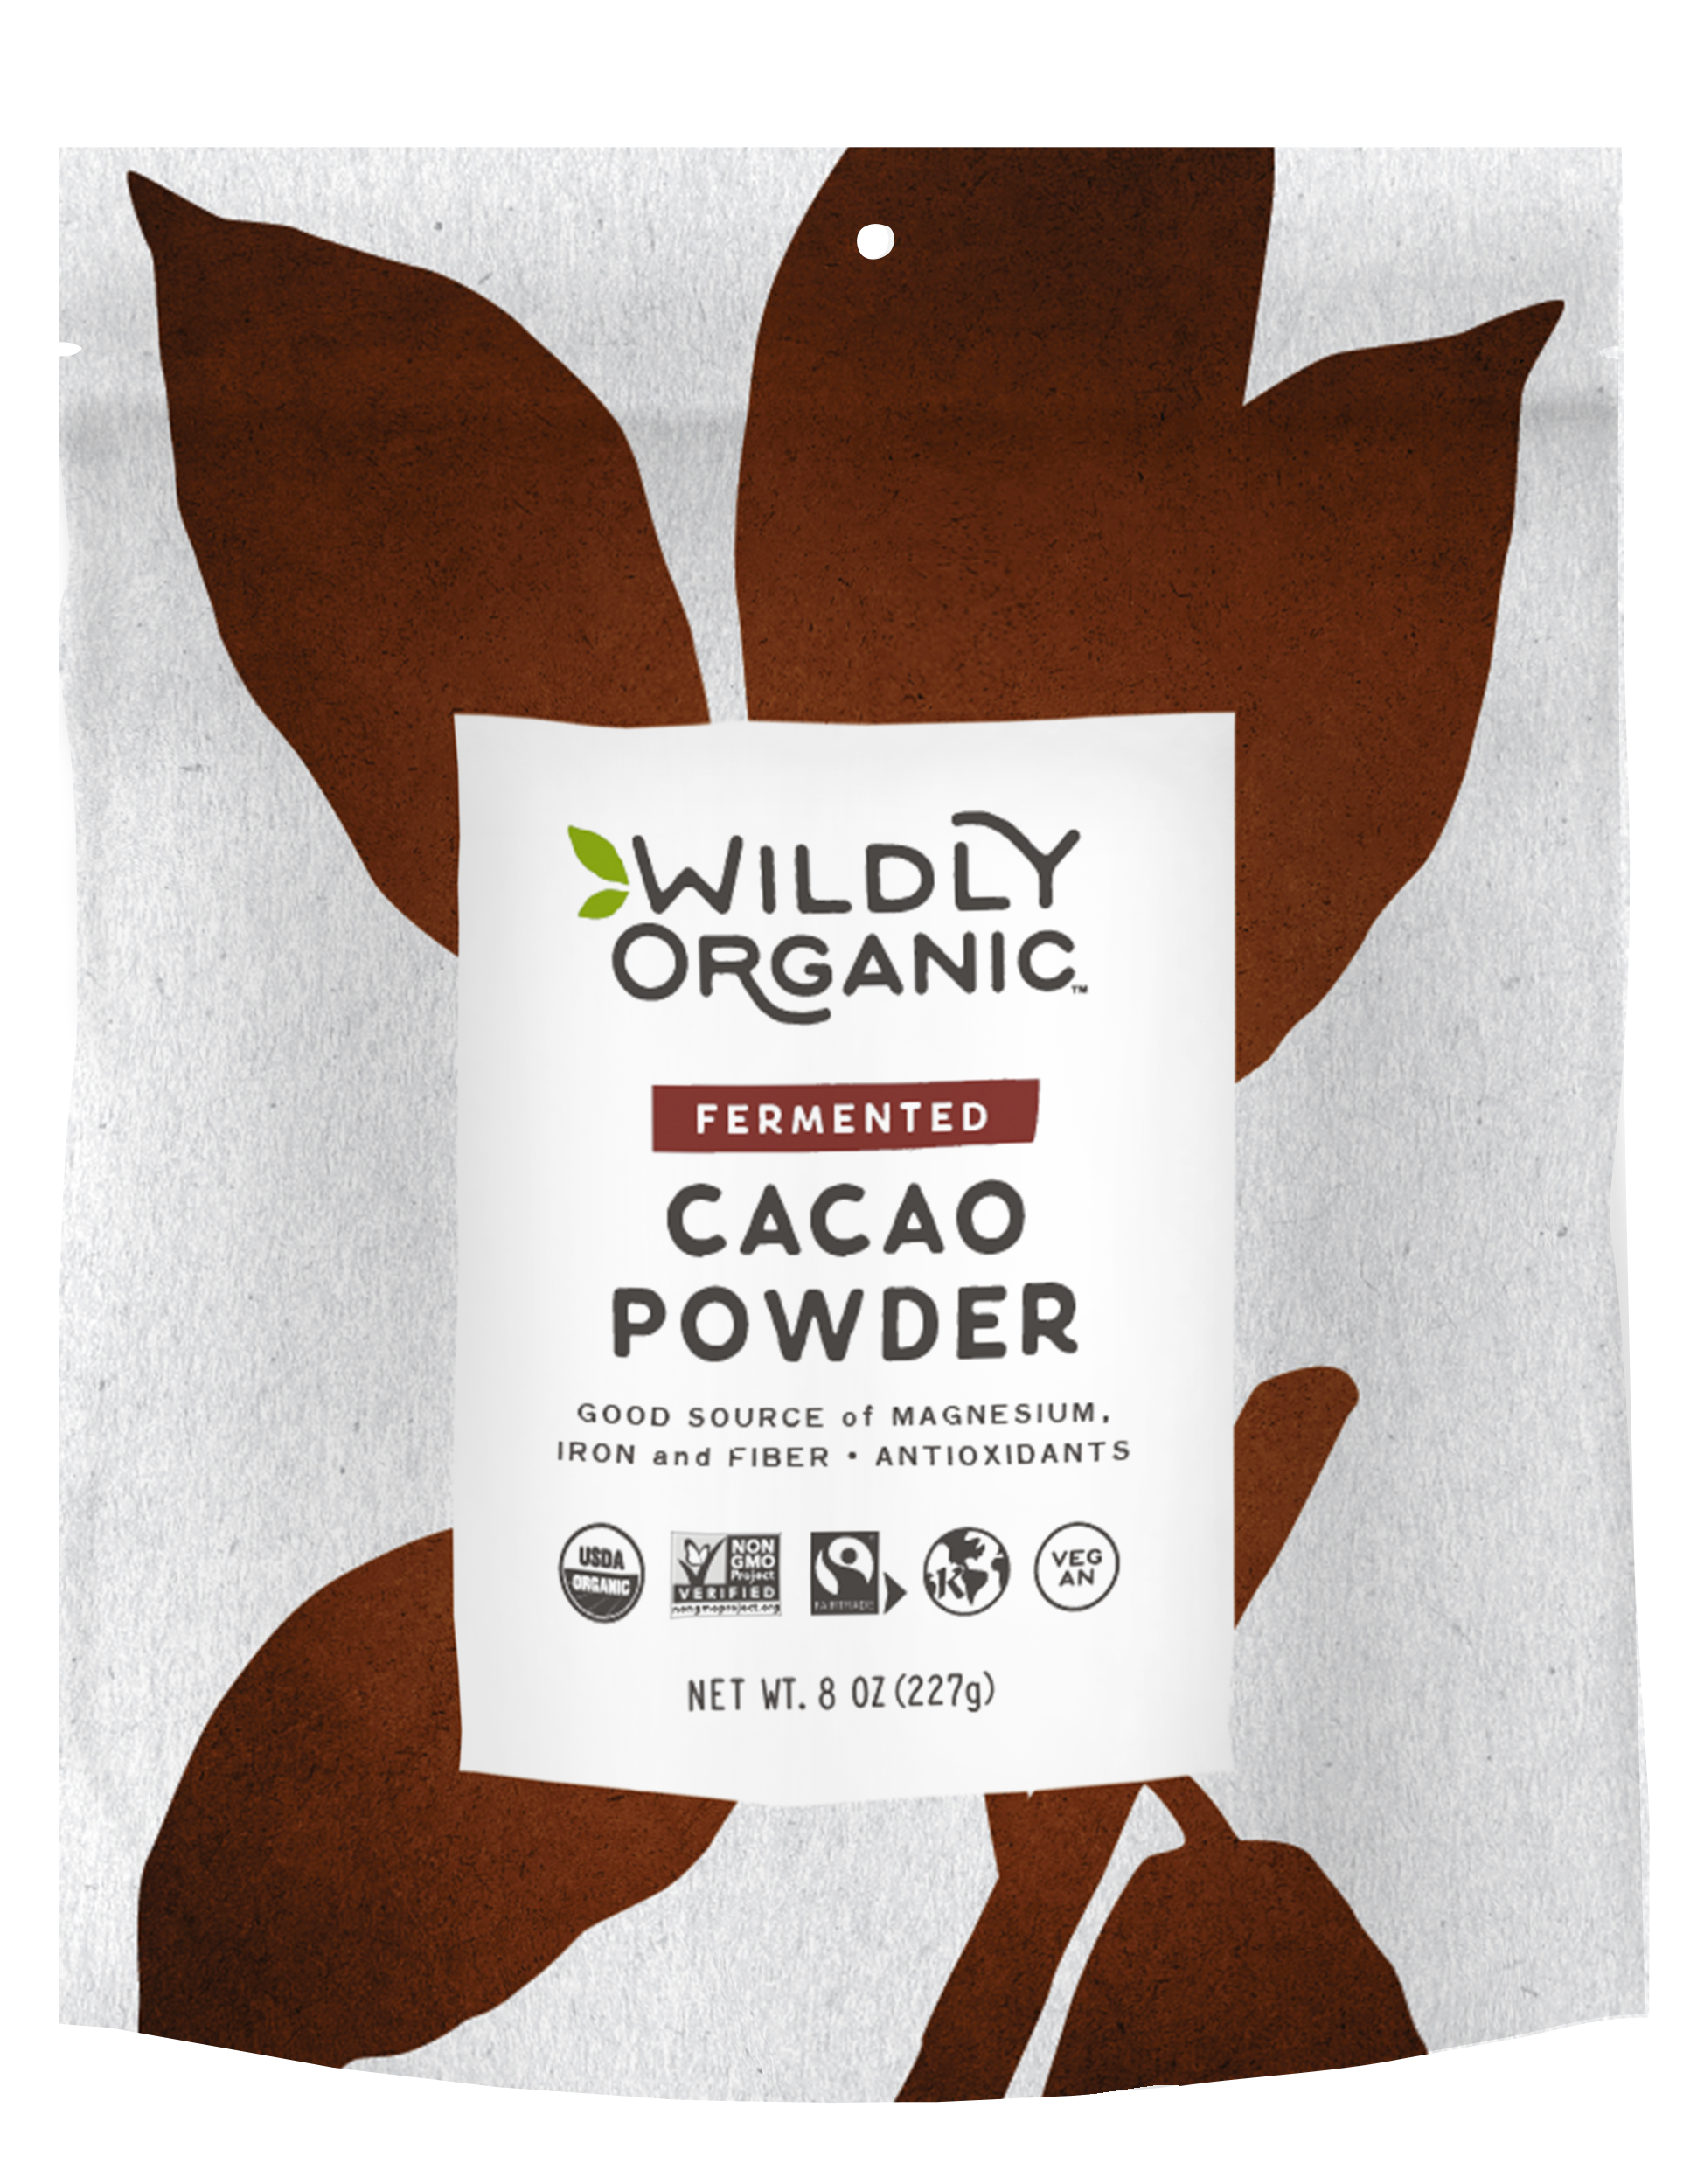 Organic Heavy Cream Powder, Certified USDA Organic